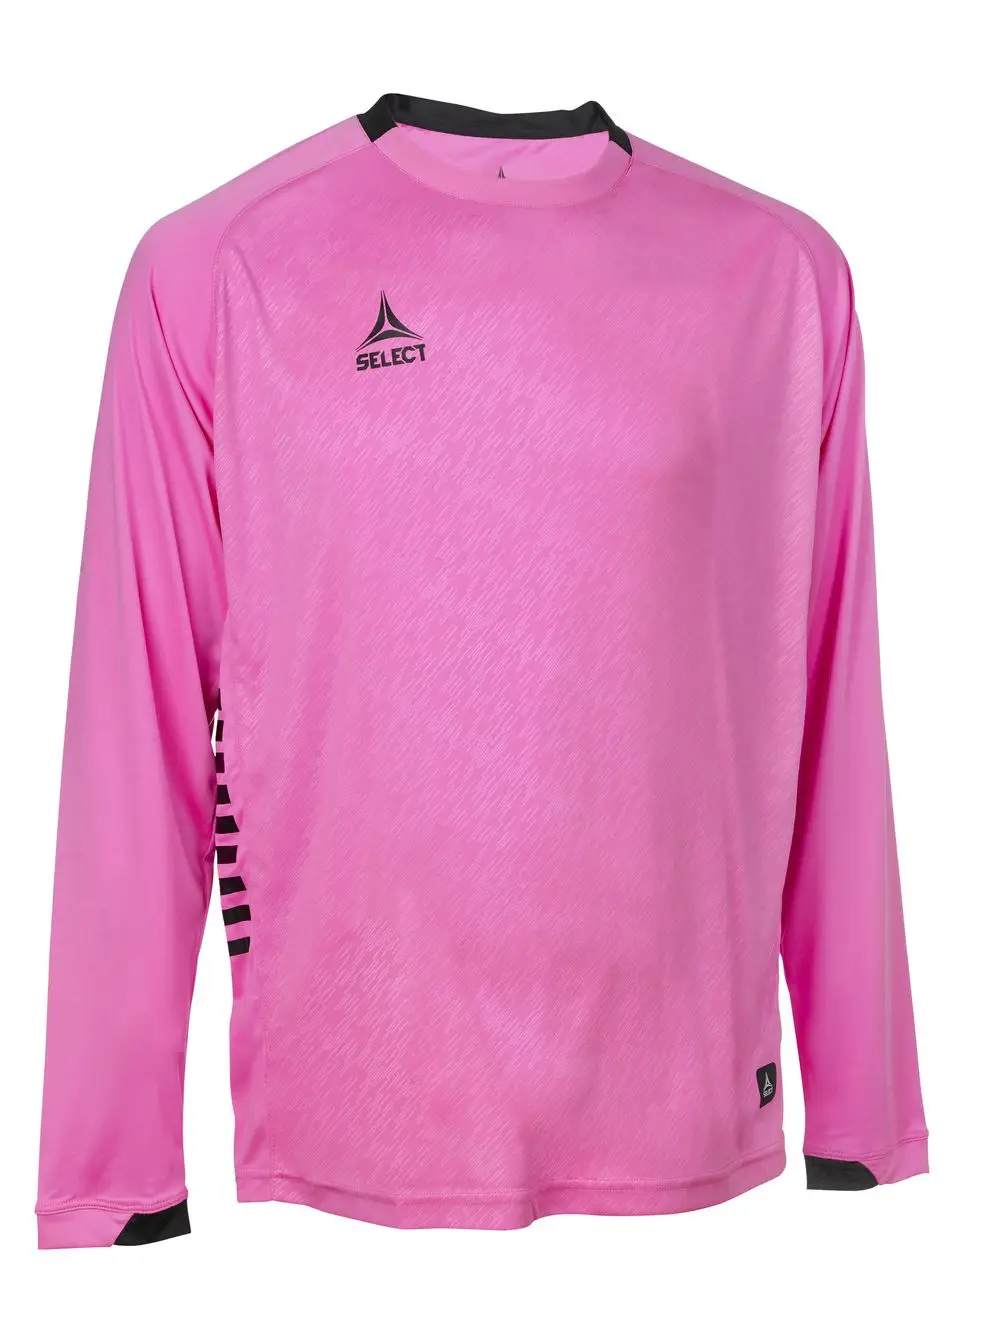 Вратарская футболка Spain goalkeeper shirt (963) рожевий, XXXL